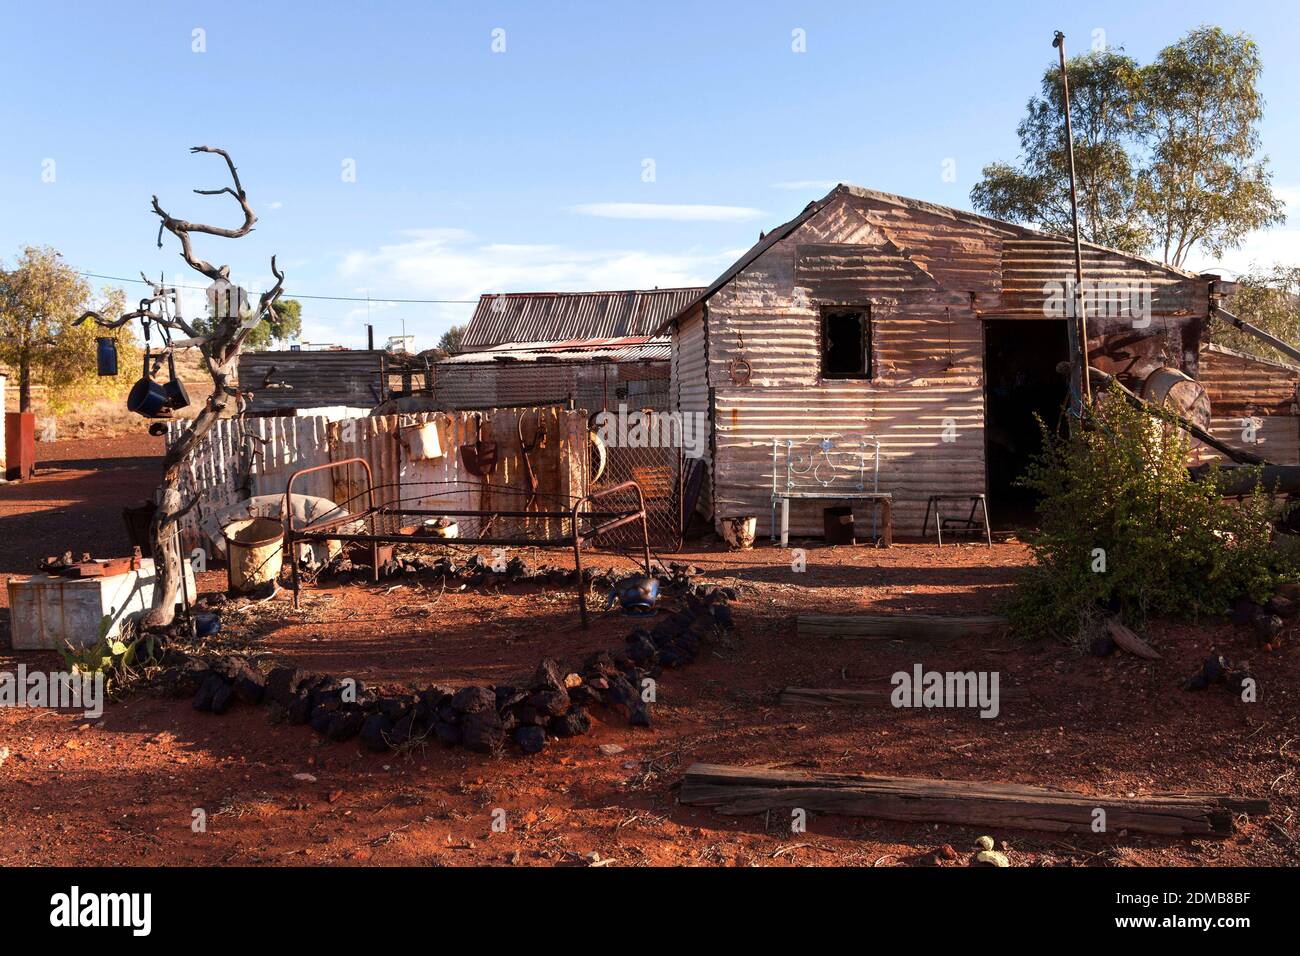 Corrugated iron houses of  the historical gold mining town Gwalia, Leonora,  Western Australia Stock Photo